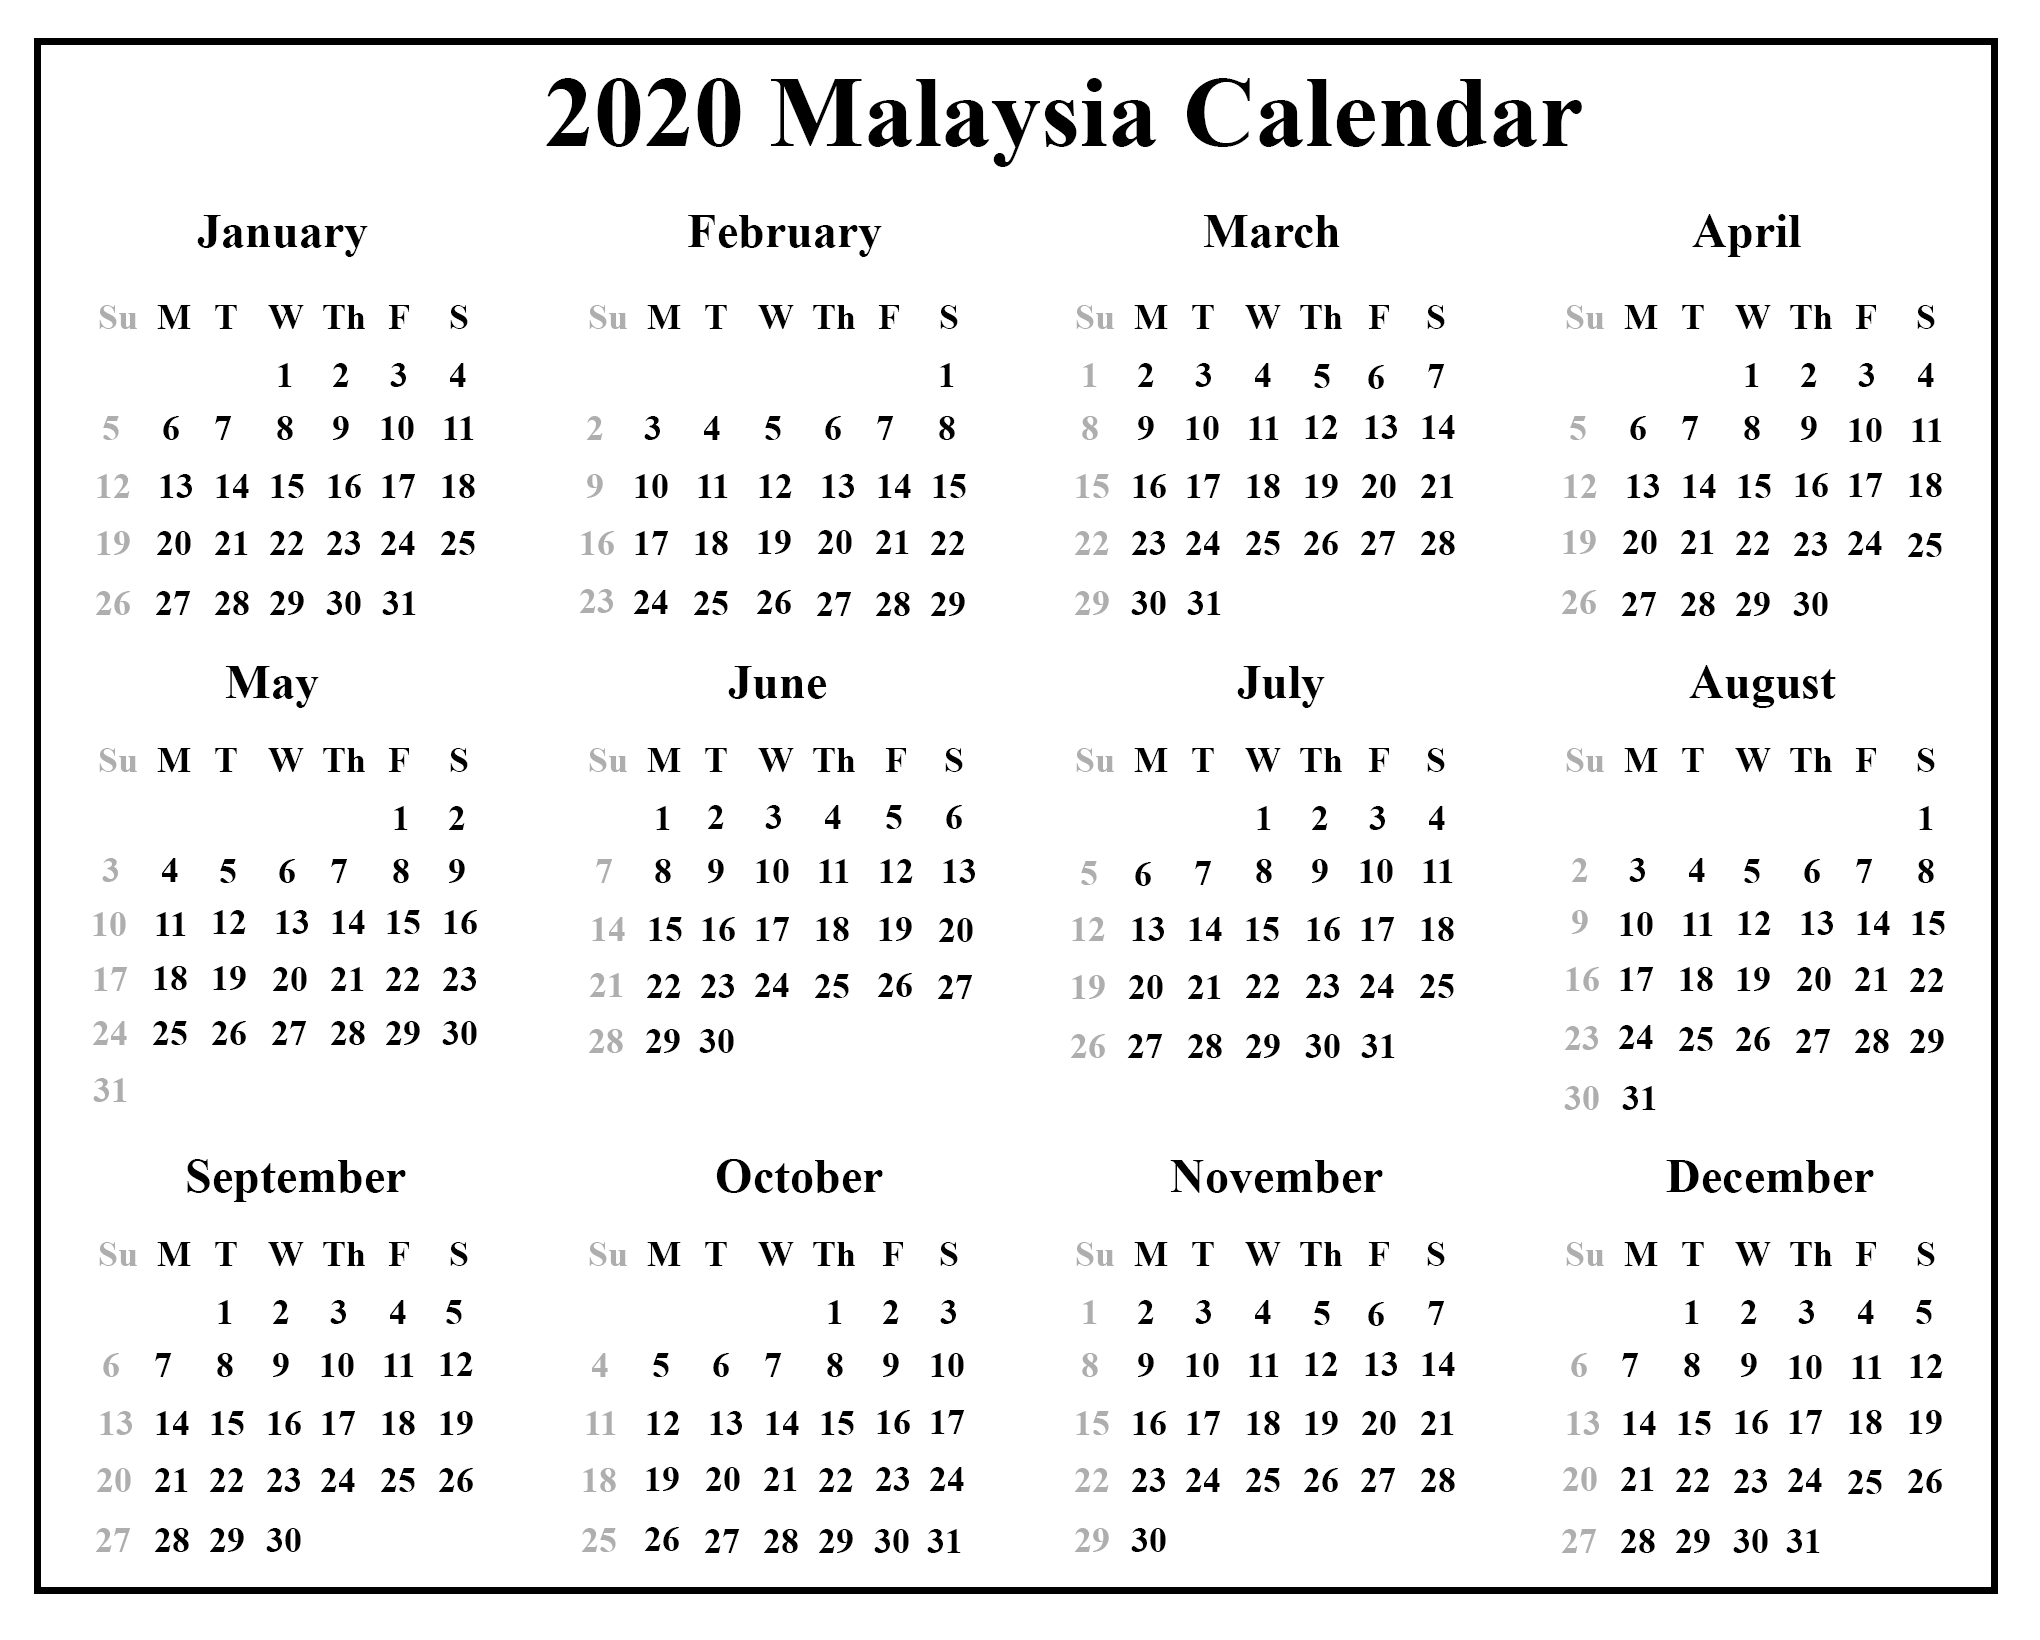 Download Free Blank Malaysia Calendar 2020 Template In Pdf